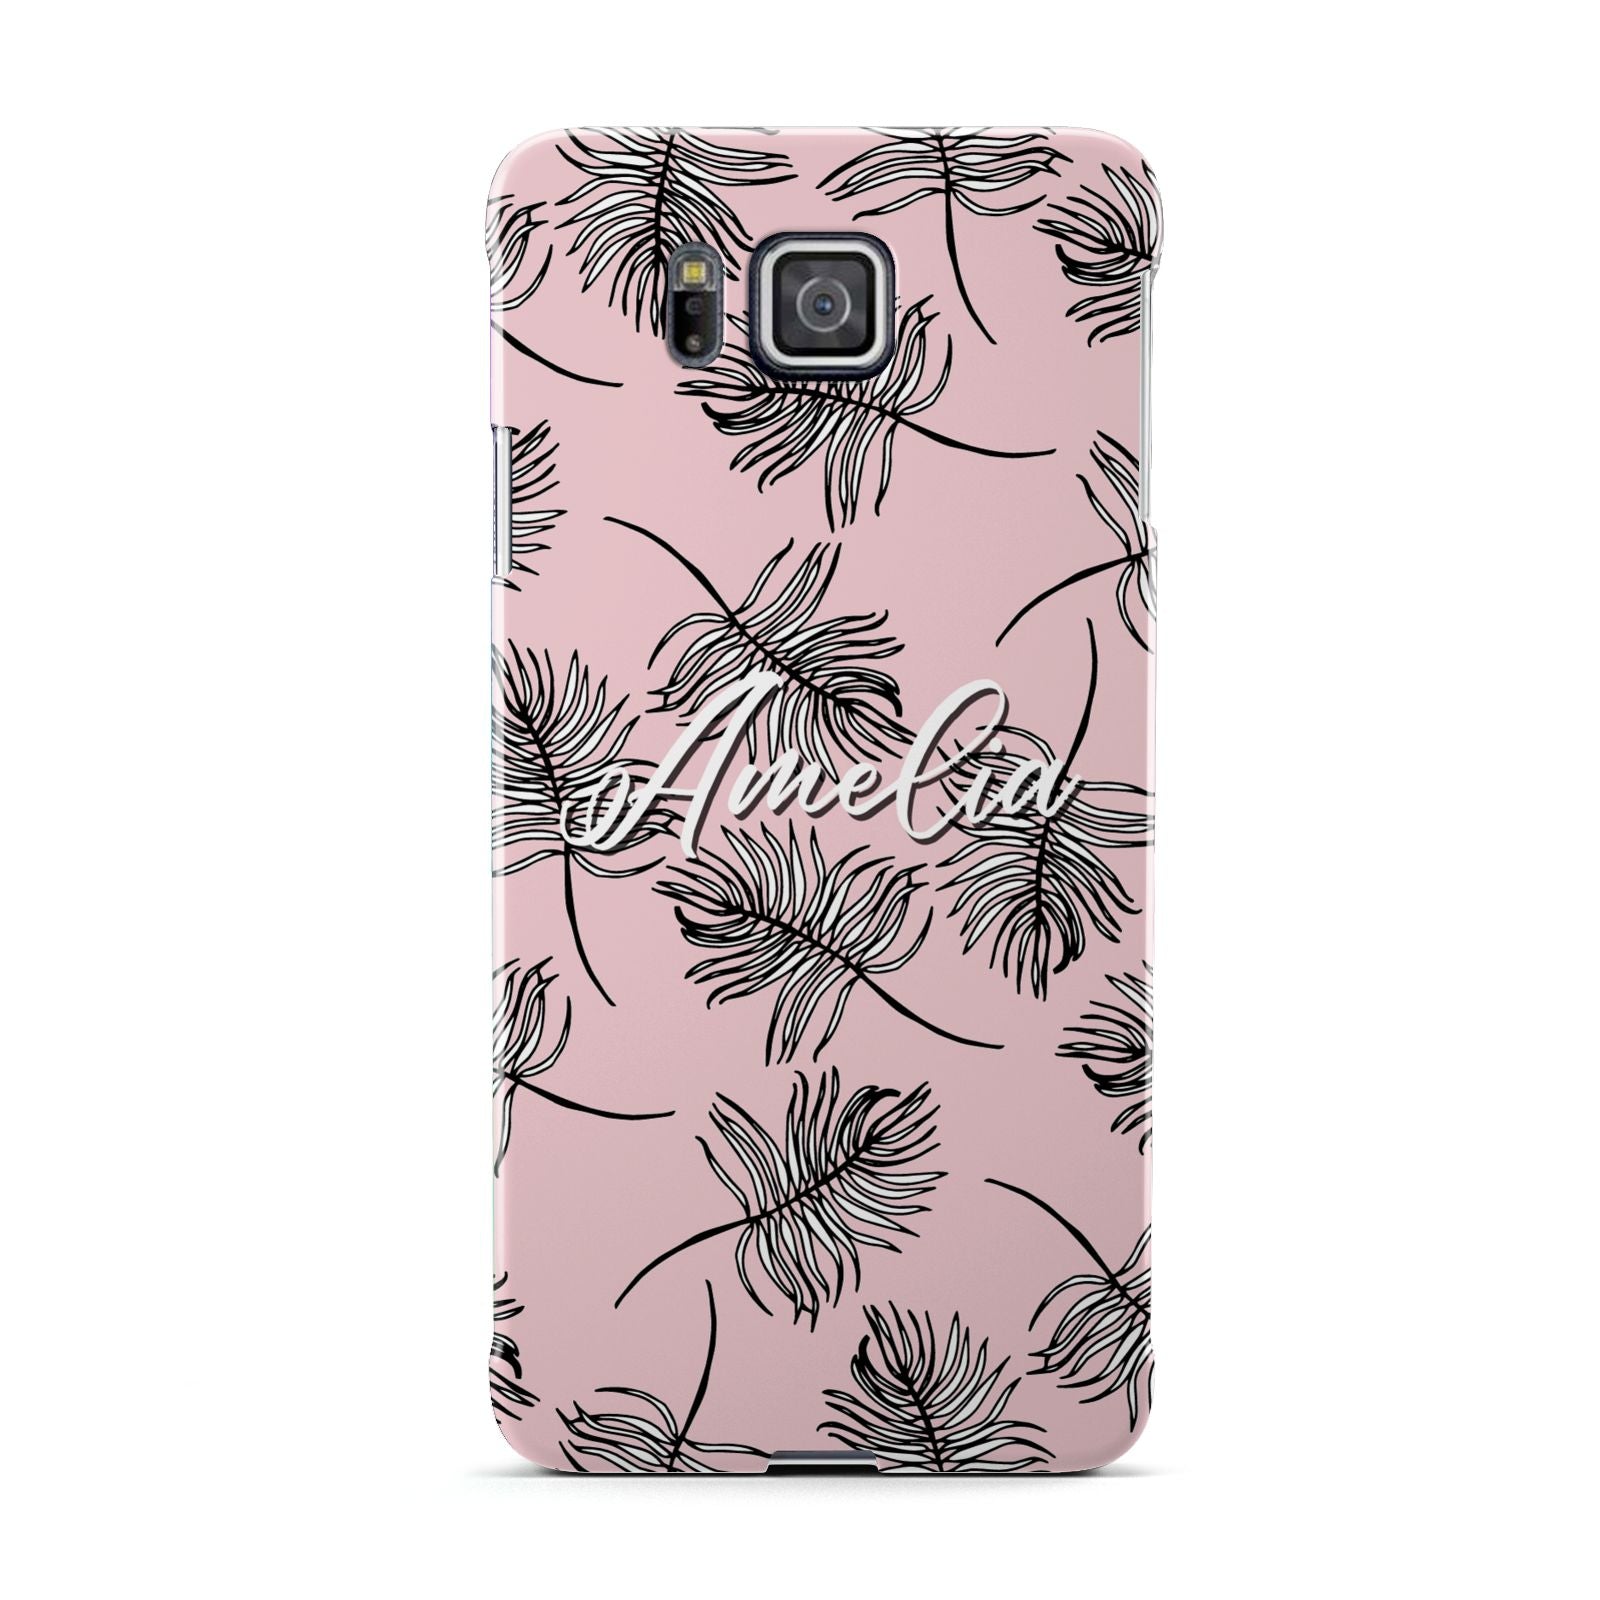 Personalised Pink Monochrome Tropical Leaf Samsung Galaxy Alpha Case